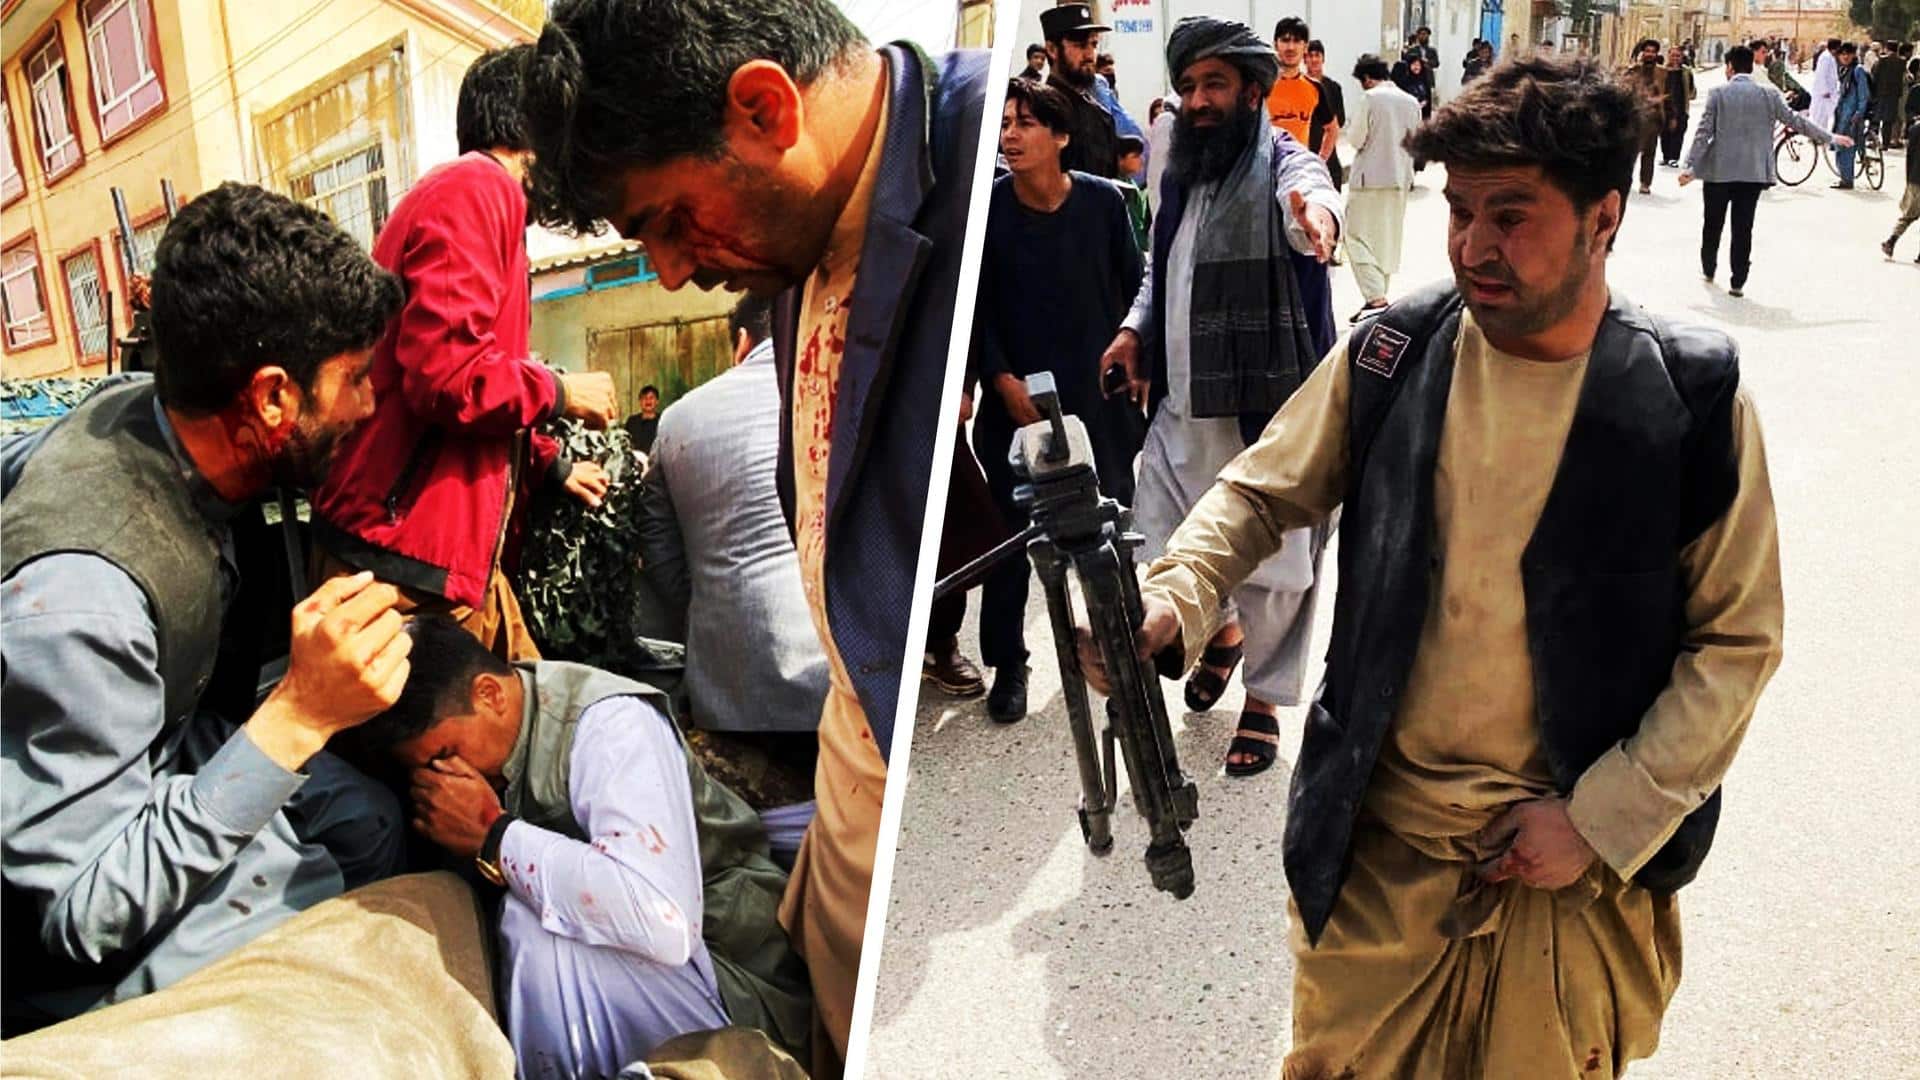 Afghanistan: Blast at journalist award event kills 1, many injured